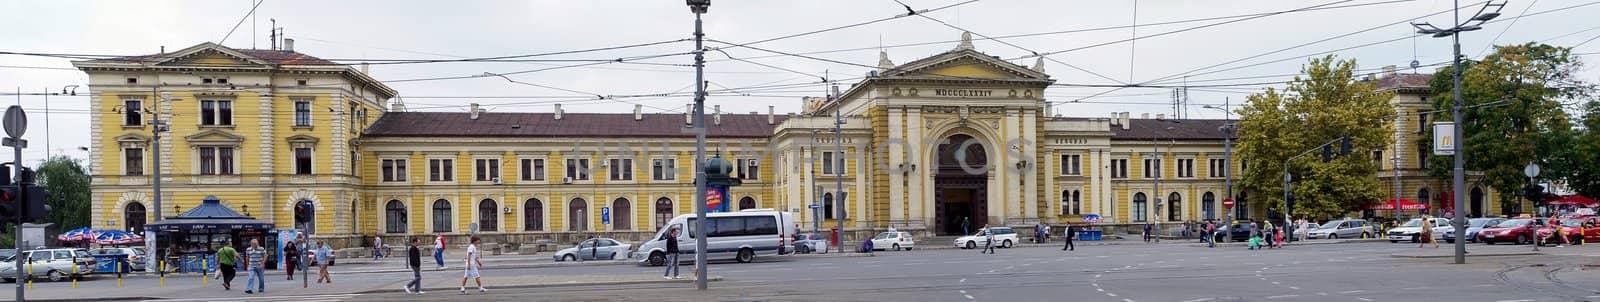 Old railway station building in Belgrade, Serbia by Stoyanov